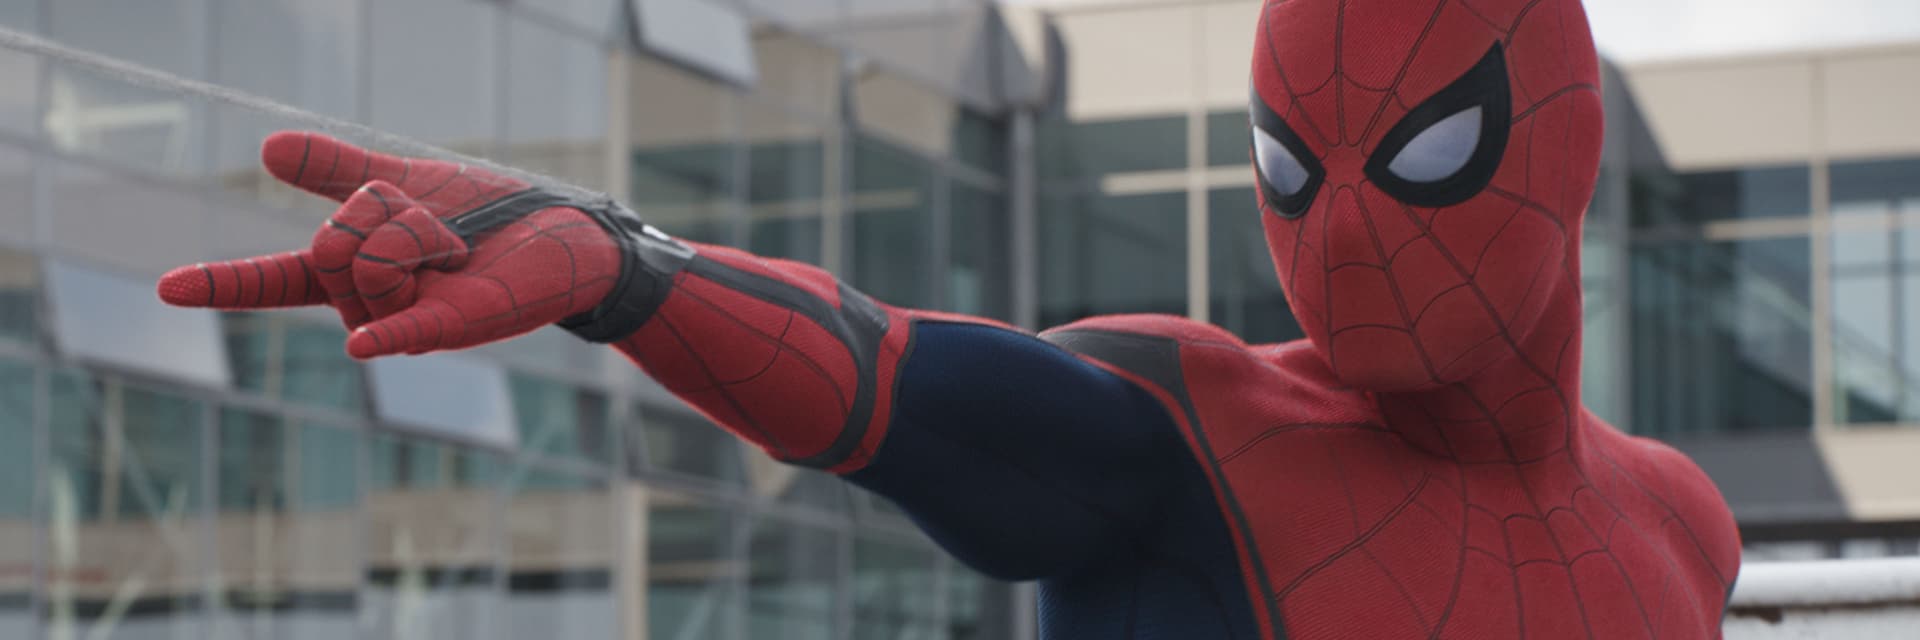 Spider-Man (Peter Parker), Powers, Villains, History